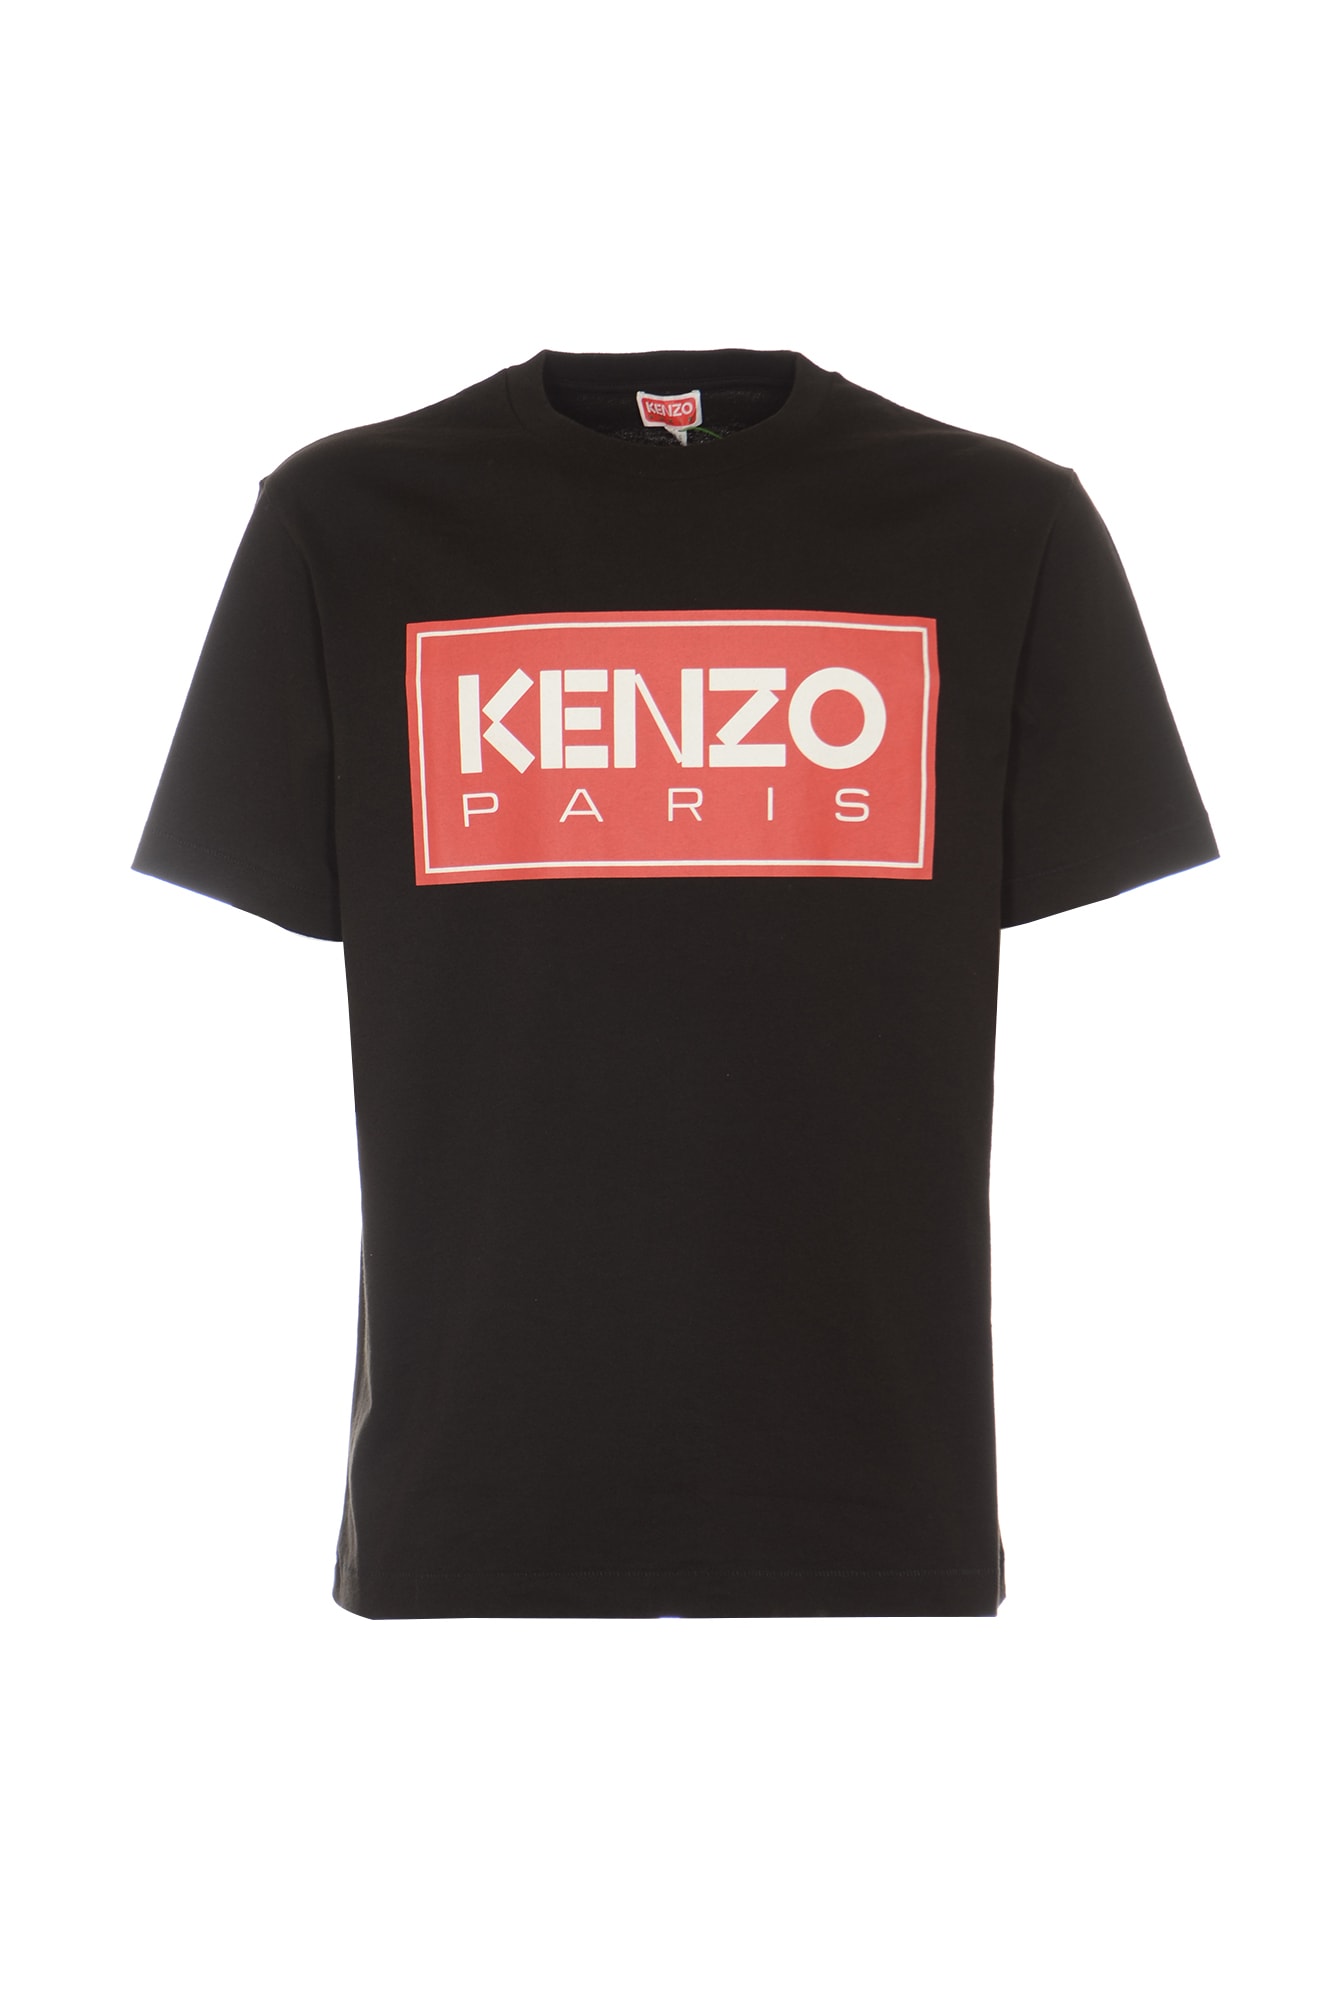 Kenzo Paris Classic T-shirt